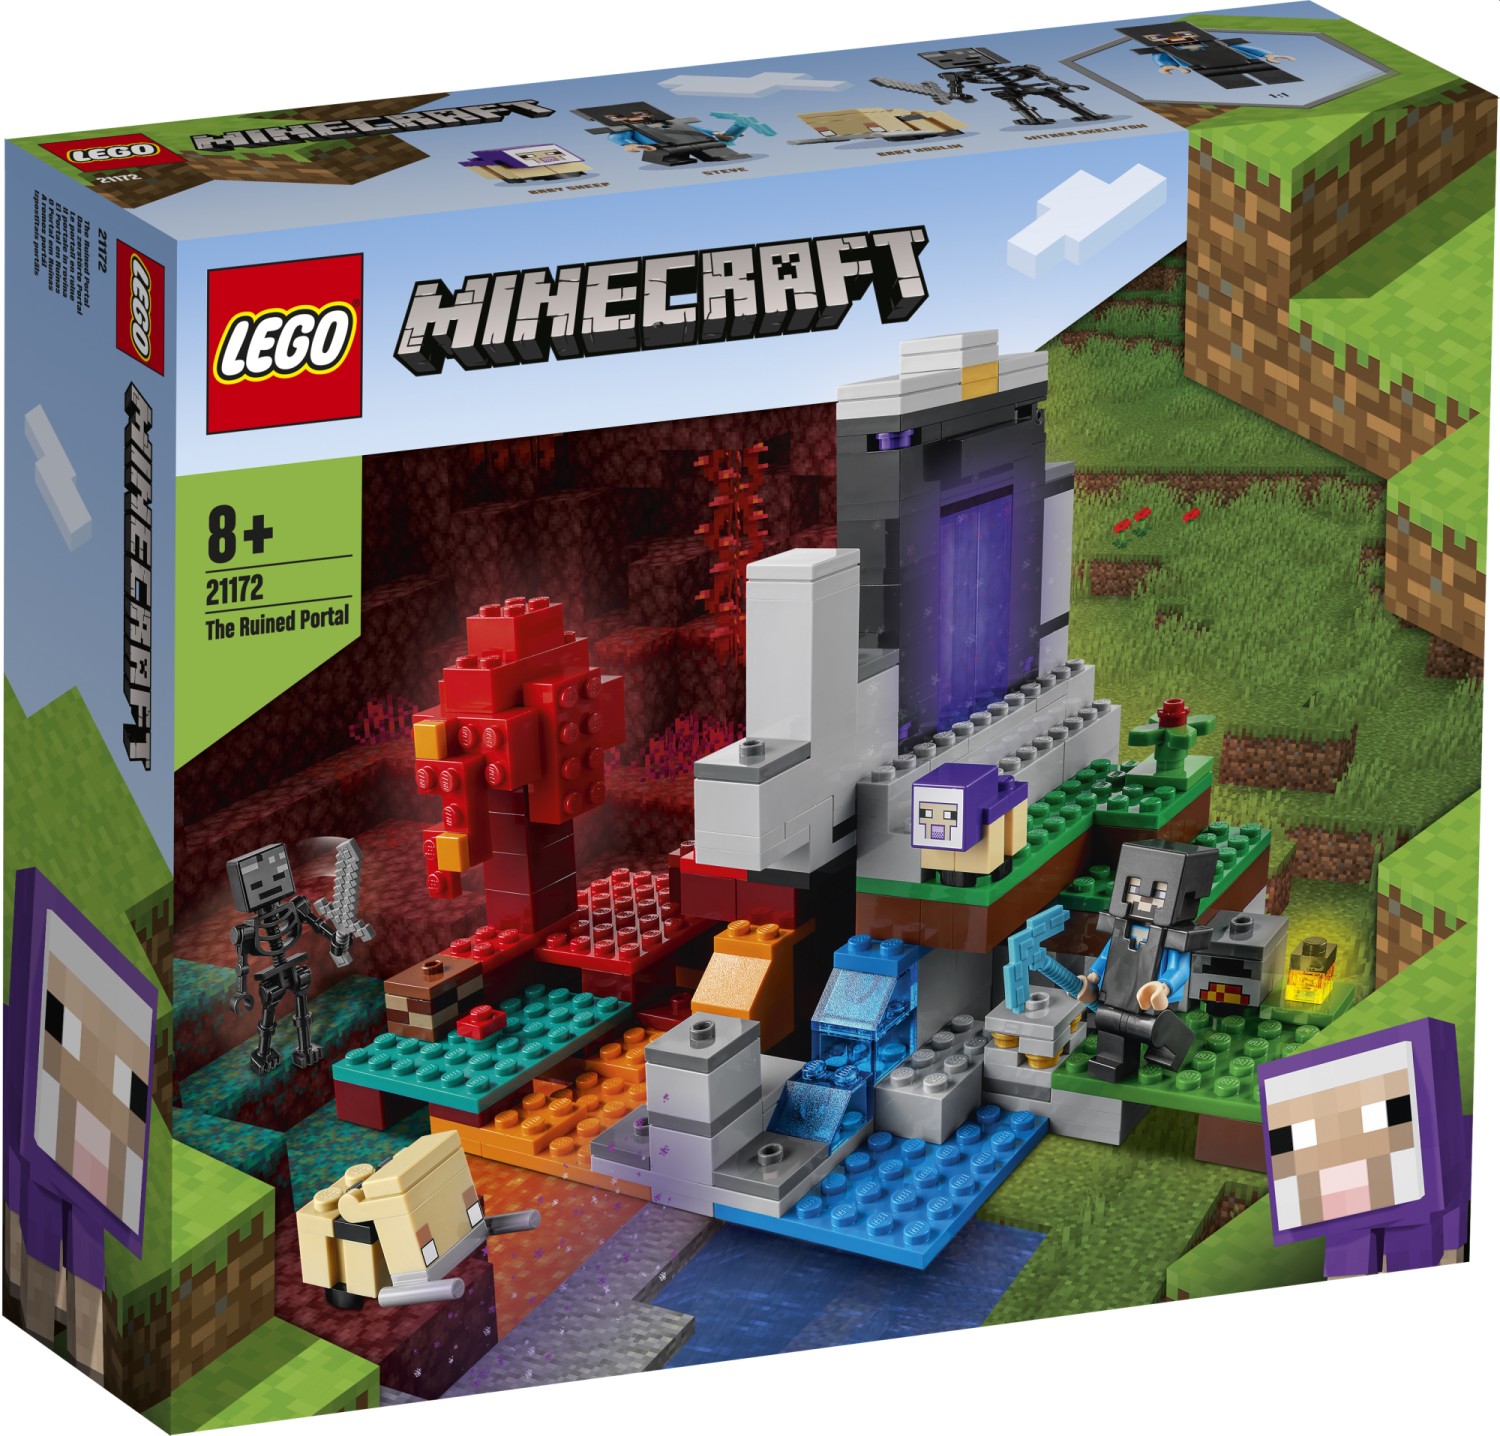 OFFICIAL PHOTOS!! LEGO Minecraft Sets â Summer 2021 â Lets Build Lego